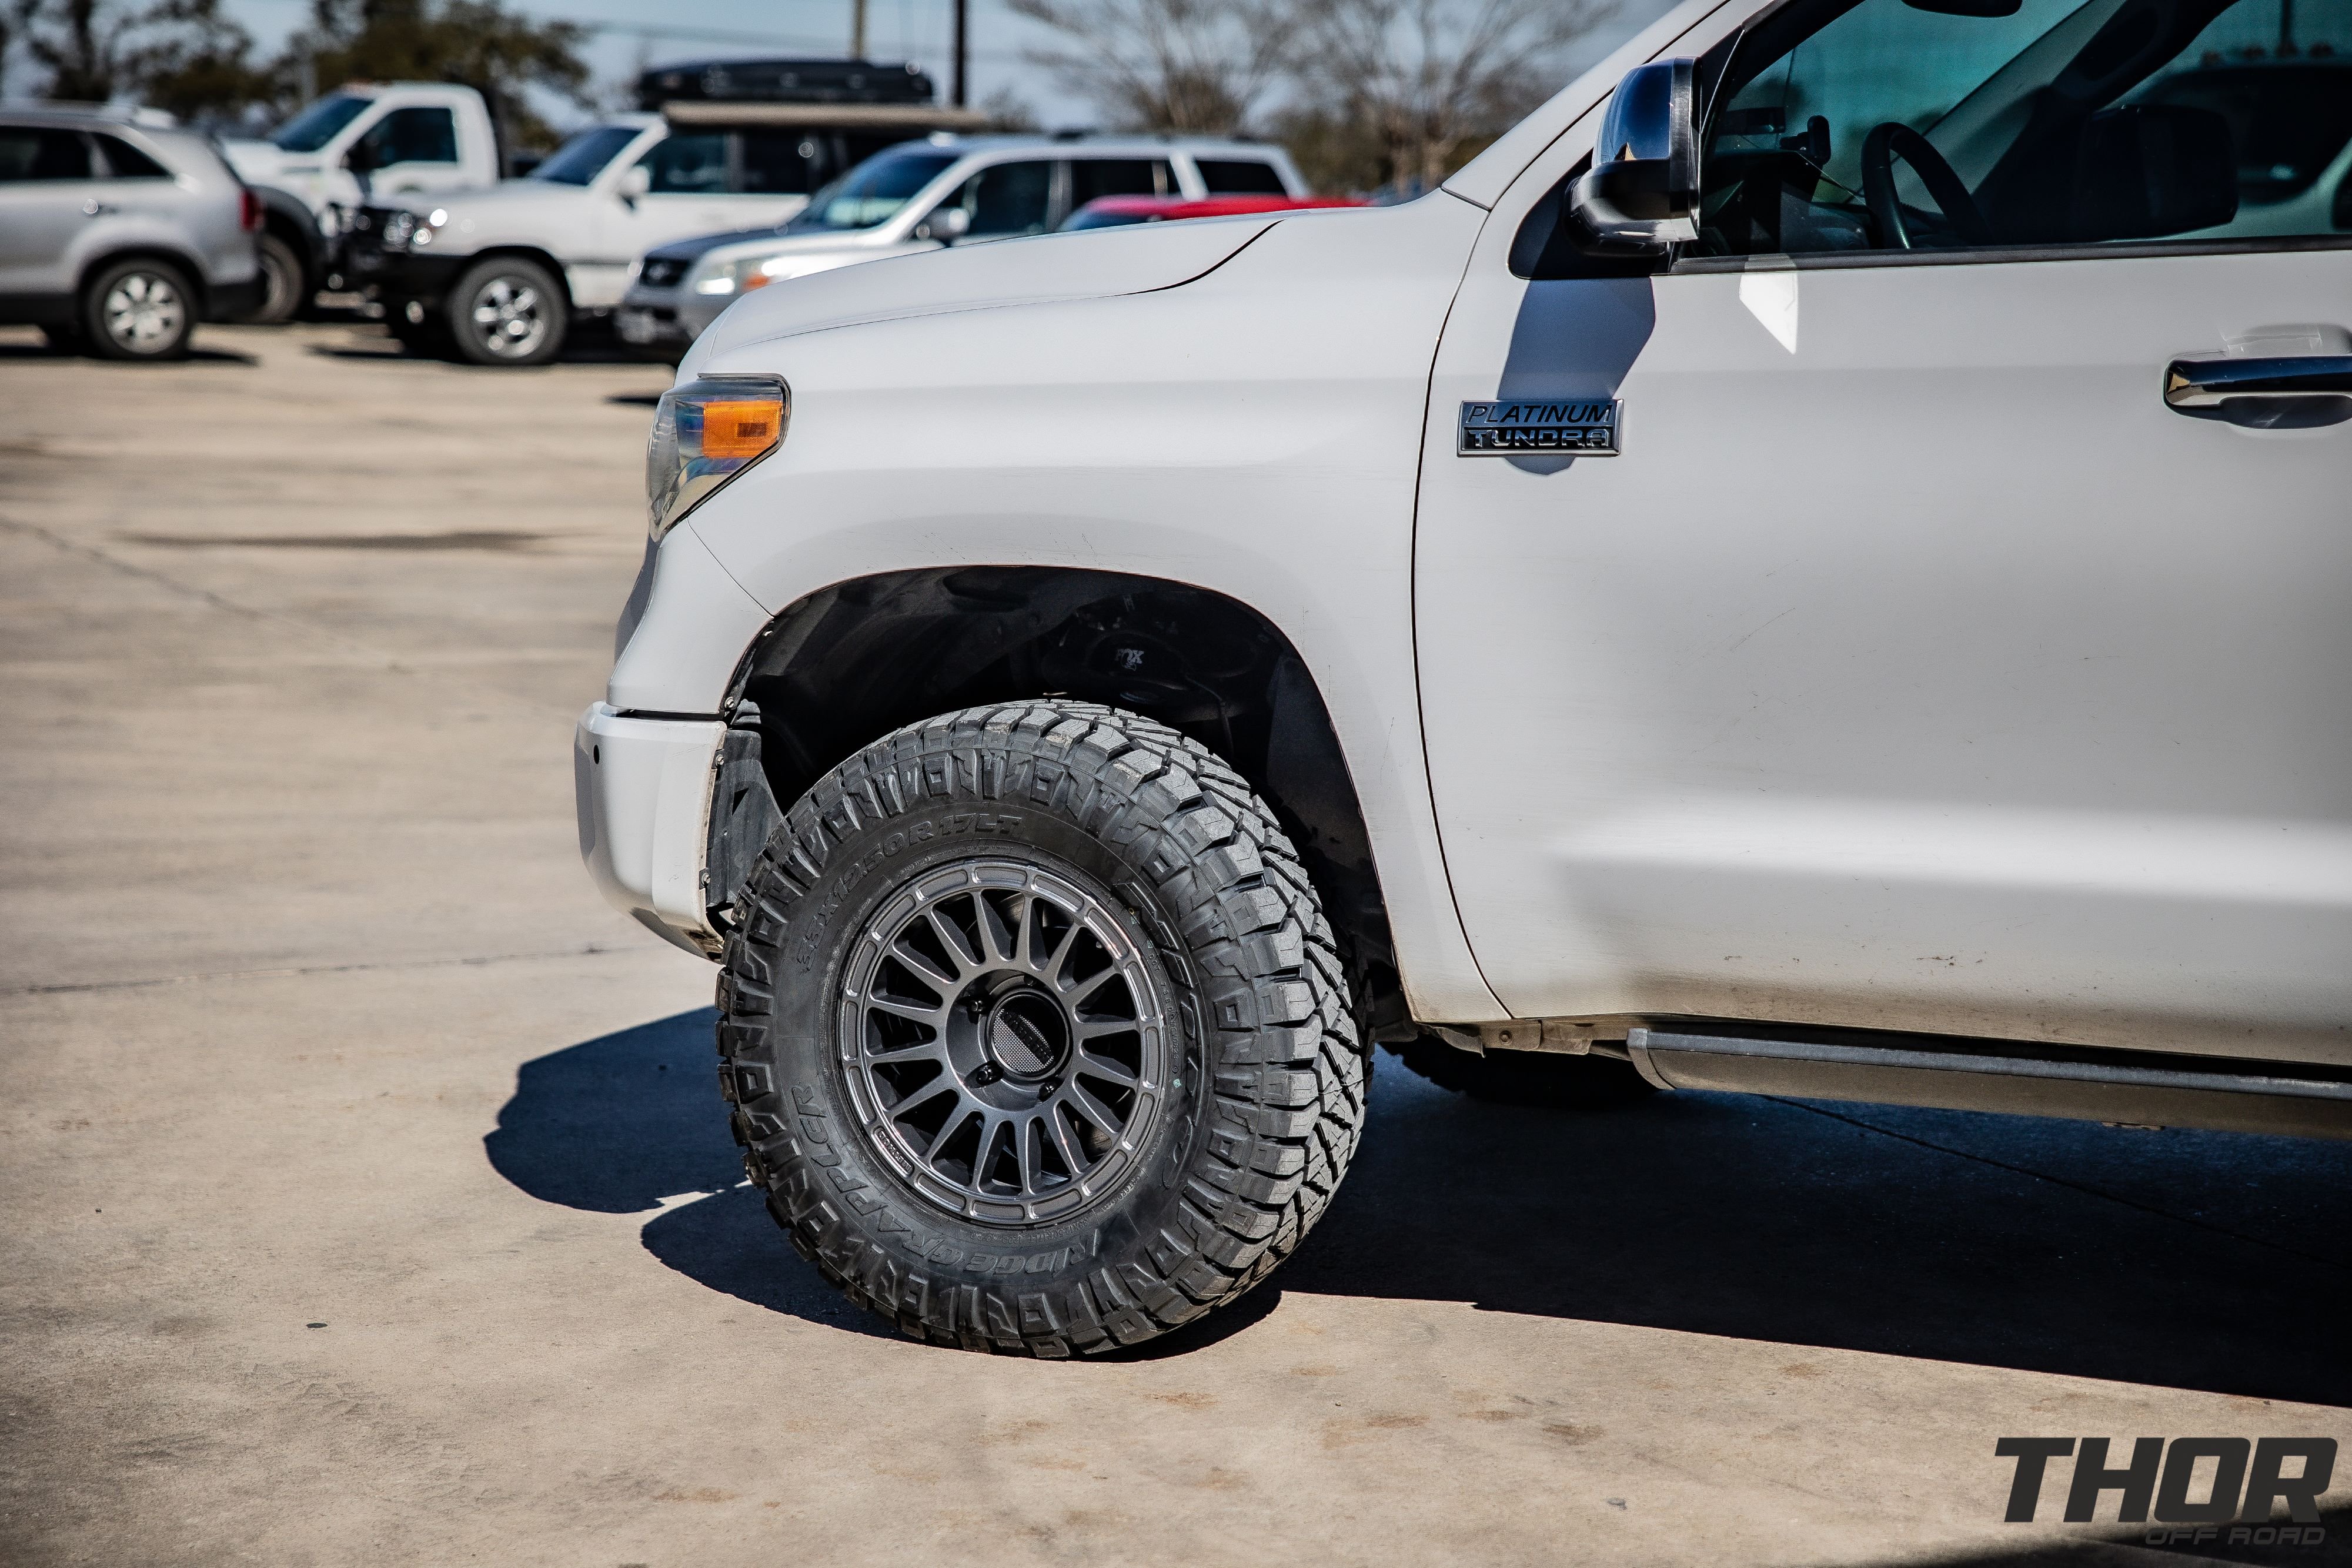 2016 Toyota Tundra Platinum in White with Fox 2.0 Leveling Kit, Method Racing MR 314 Titanium Gloss 17" Wheels, 33x12.50R17 Nitto Ridge Grappler Tires